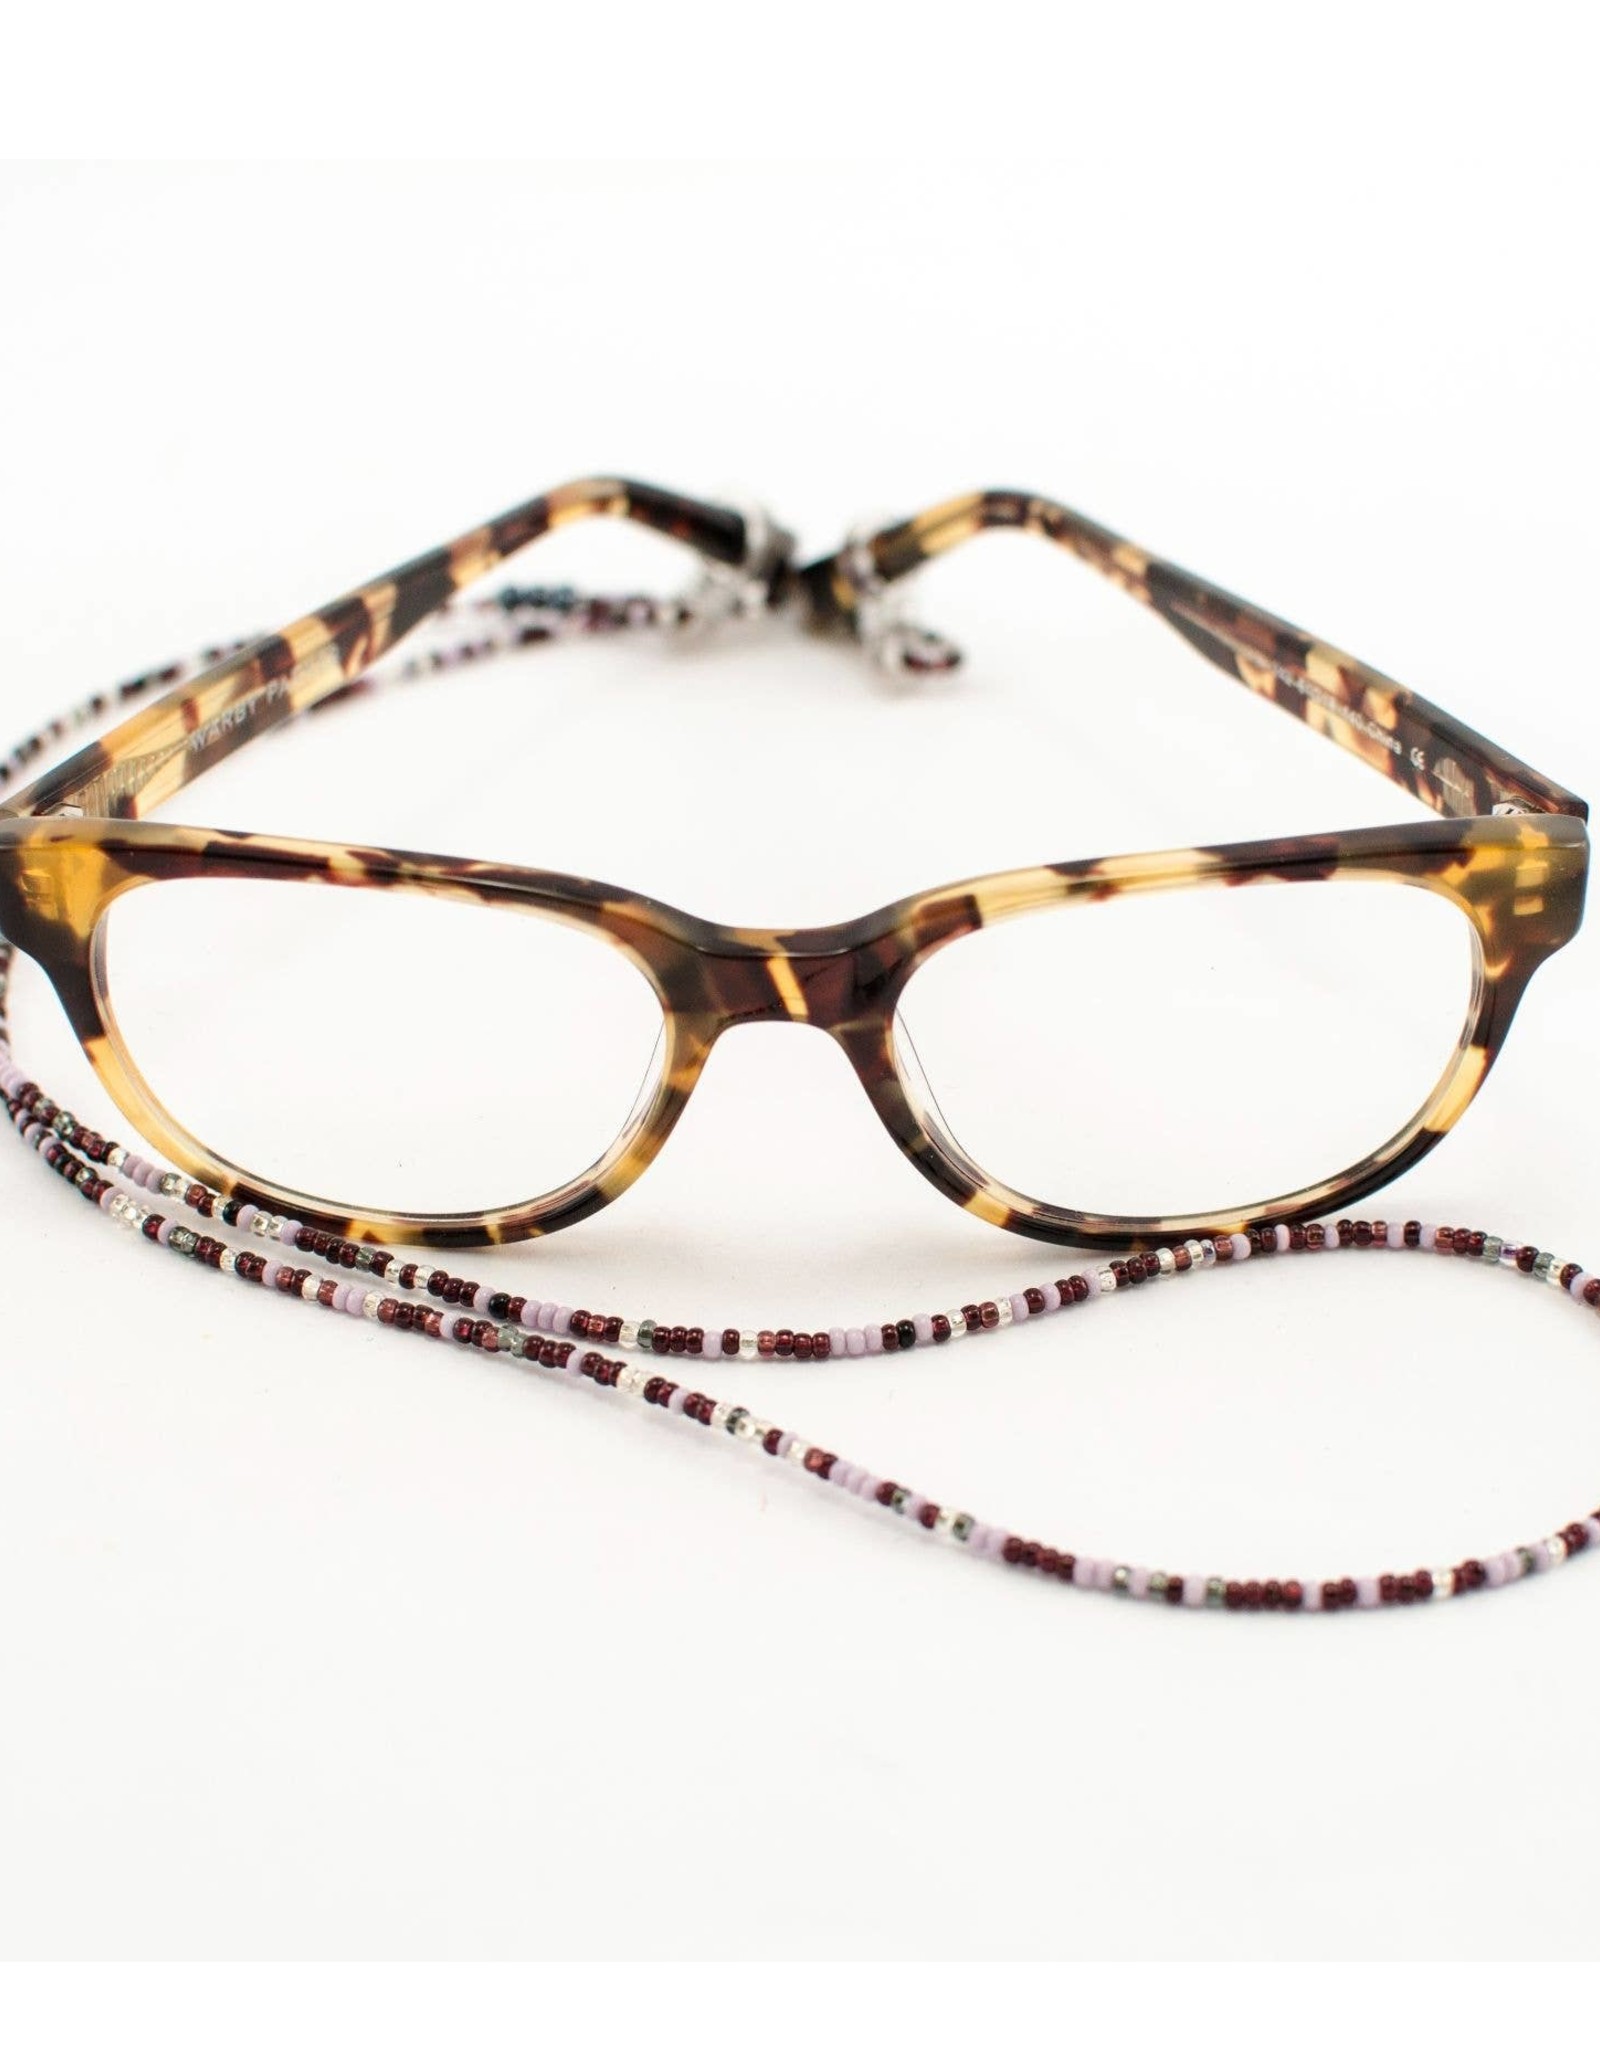 Lucia's Imports Single Strand Eyeglass Chain